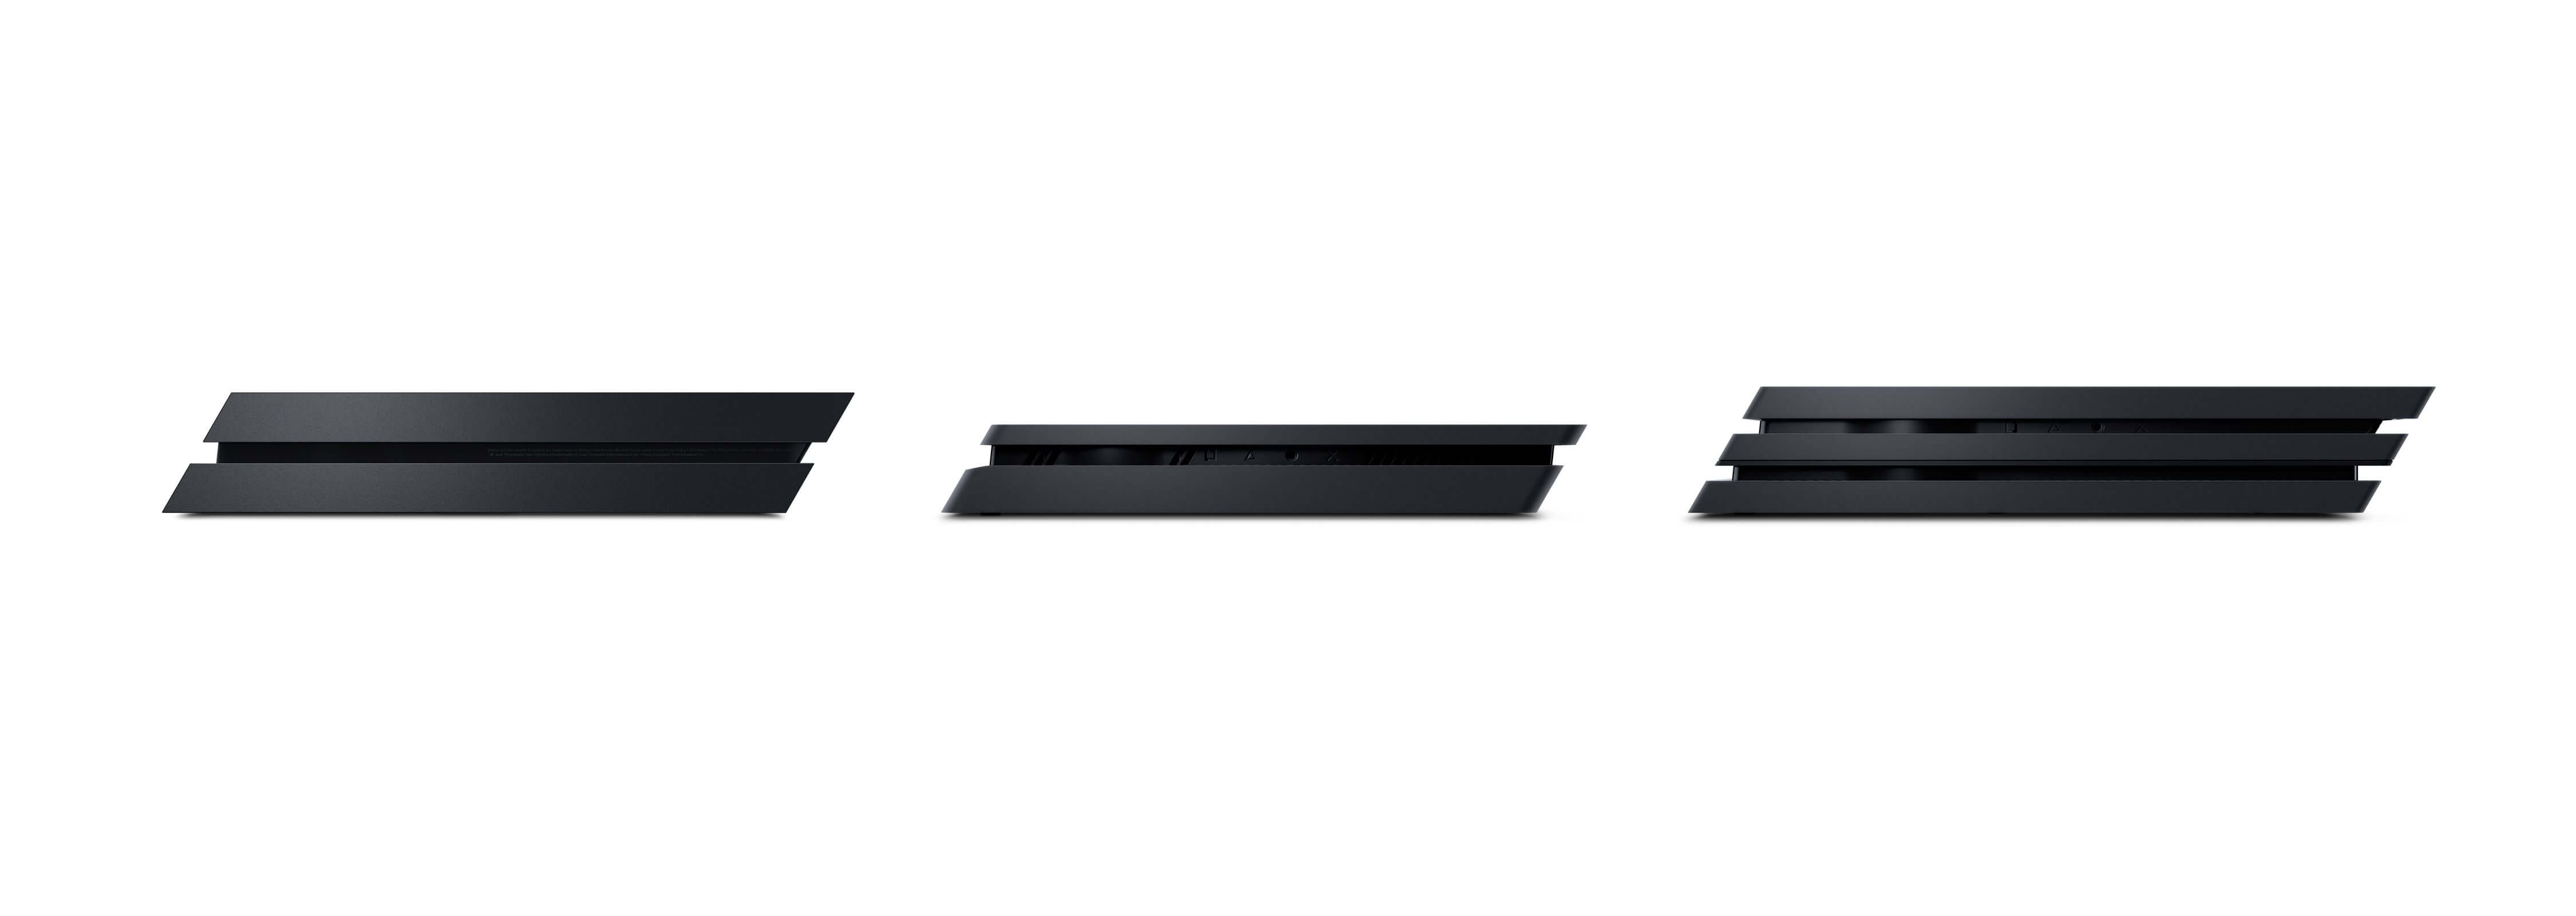 Qual a diferença entre Playstation 4, PS4 Slim e PS4 Pro? – Tecnoblog